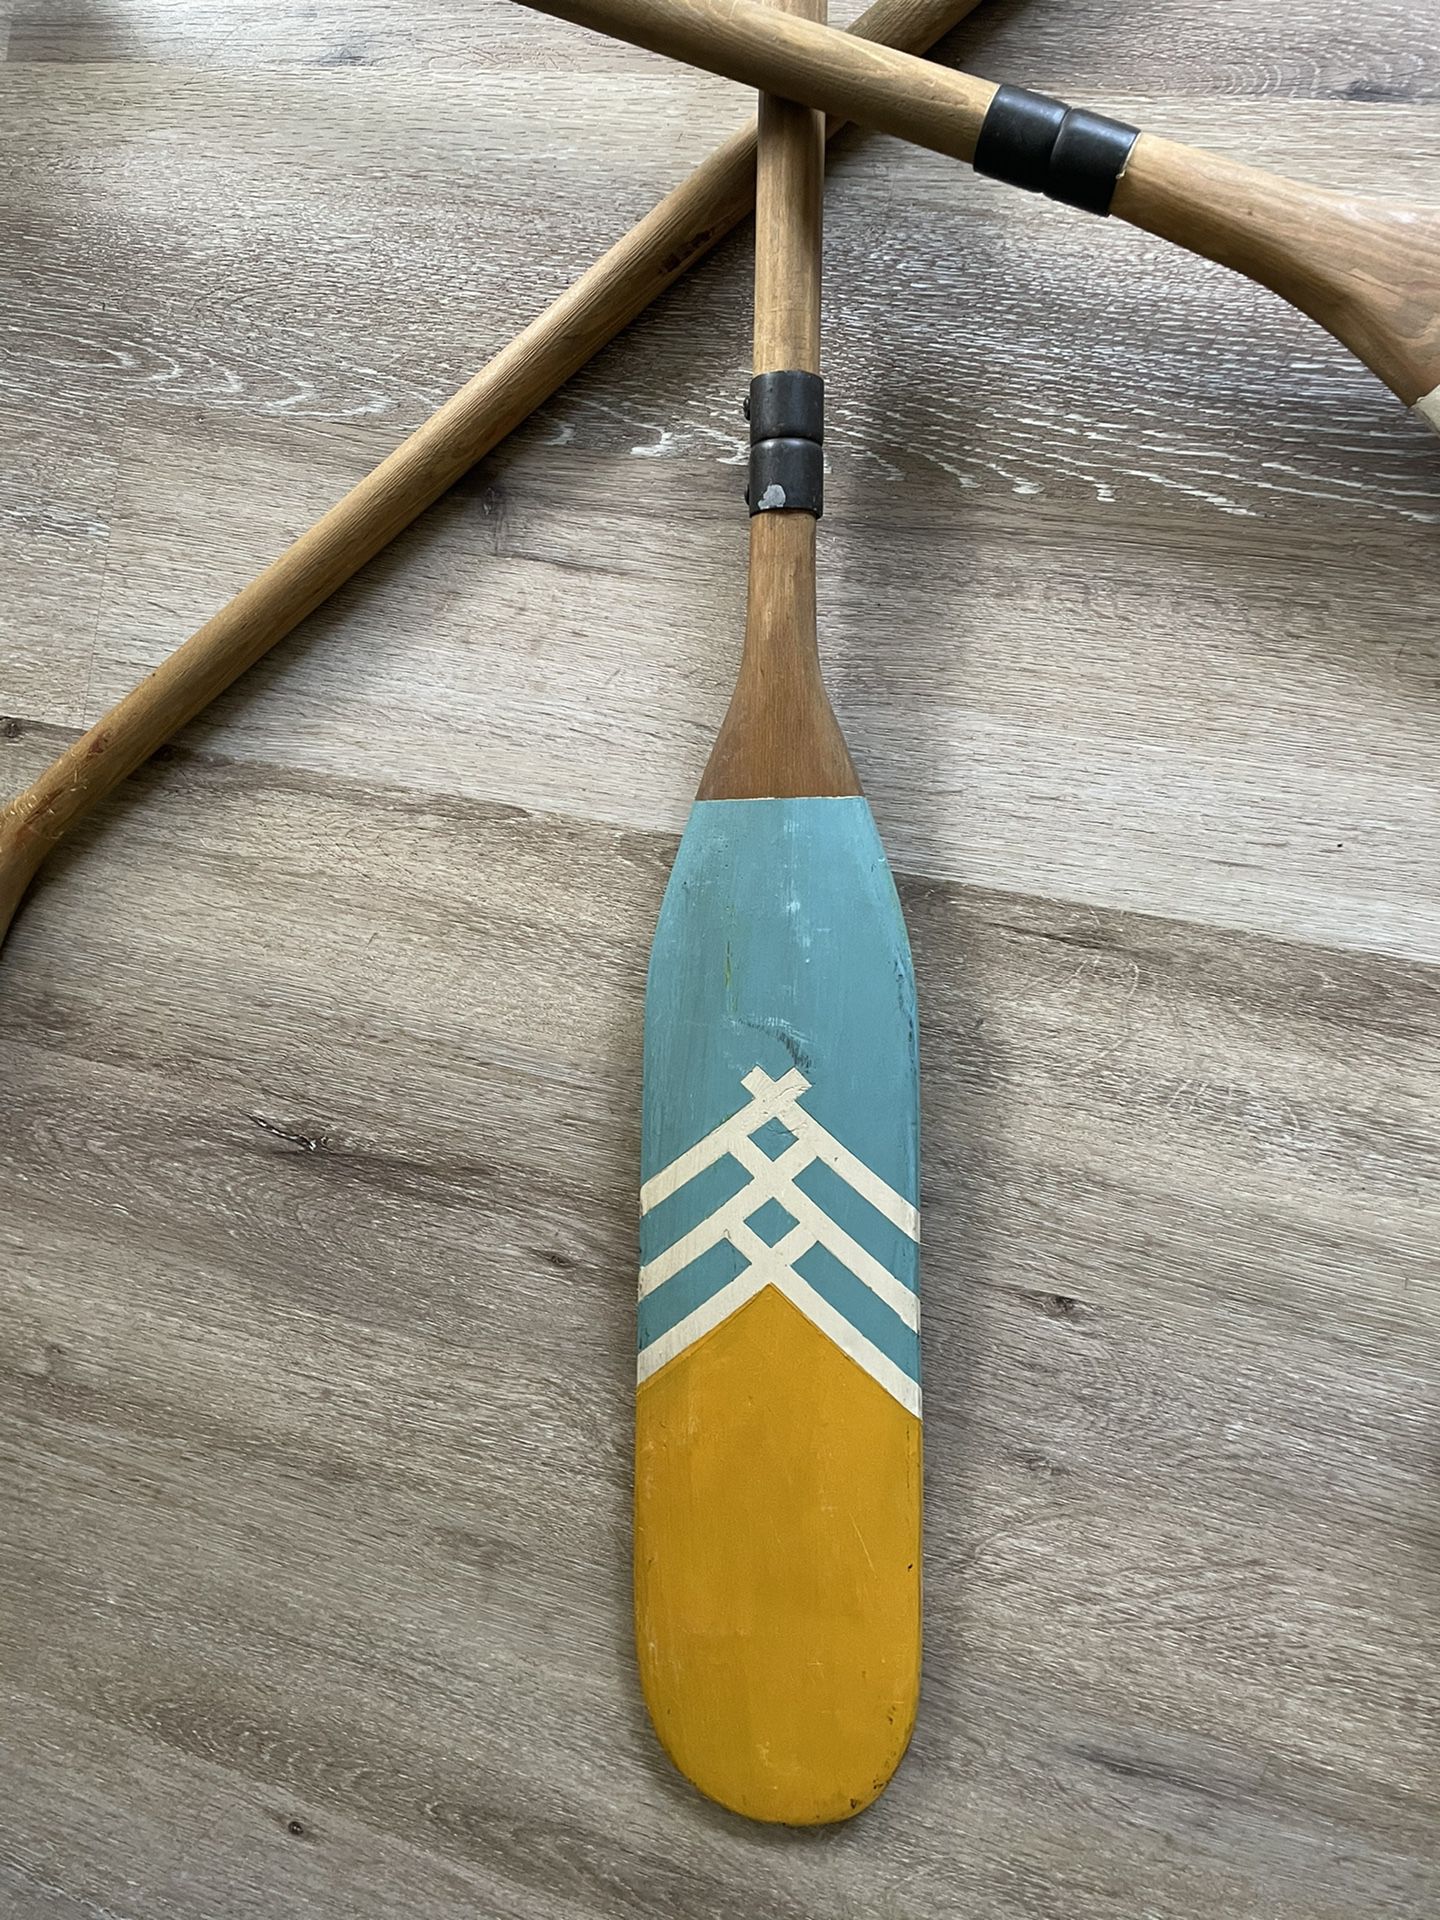 Painted Canoe Paddle SET of 3 ~Jade Feathers~ Hand painted wood canoe paddle, oar, nautical, decor, rustic, lake, decor, wall hanging